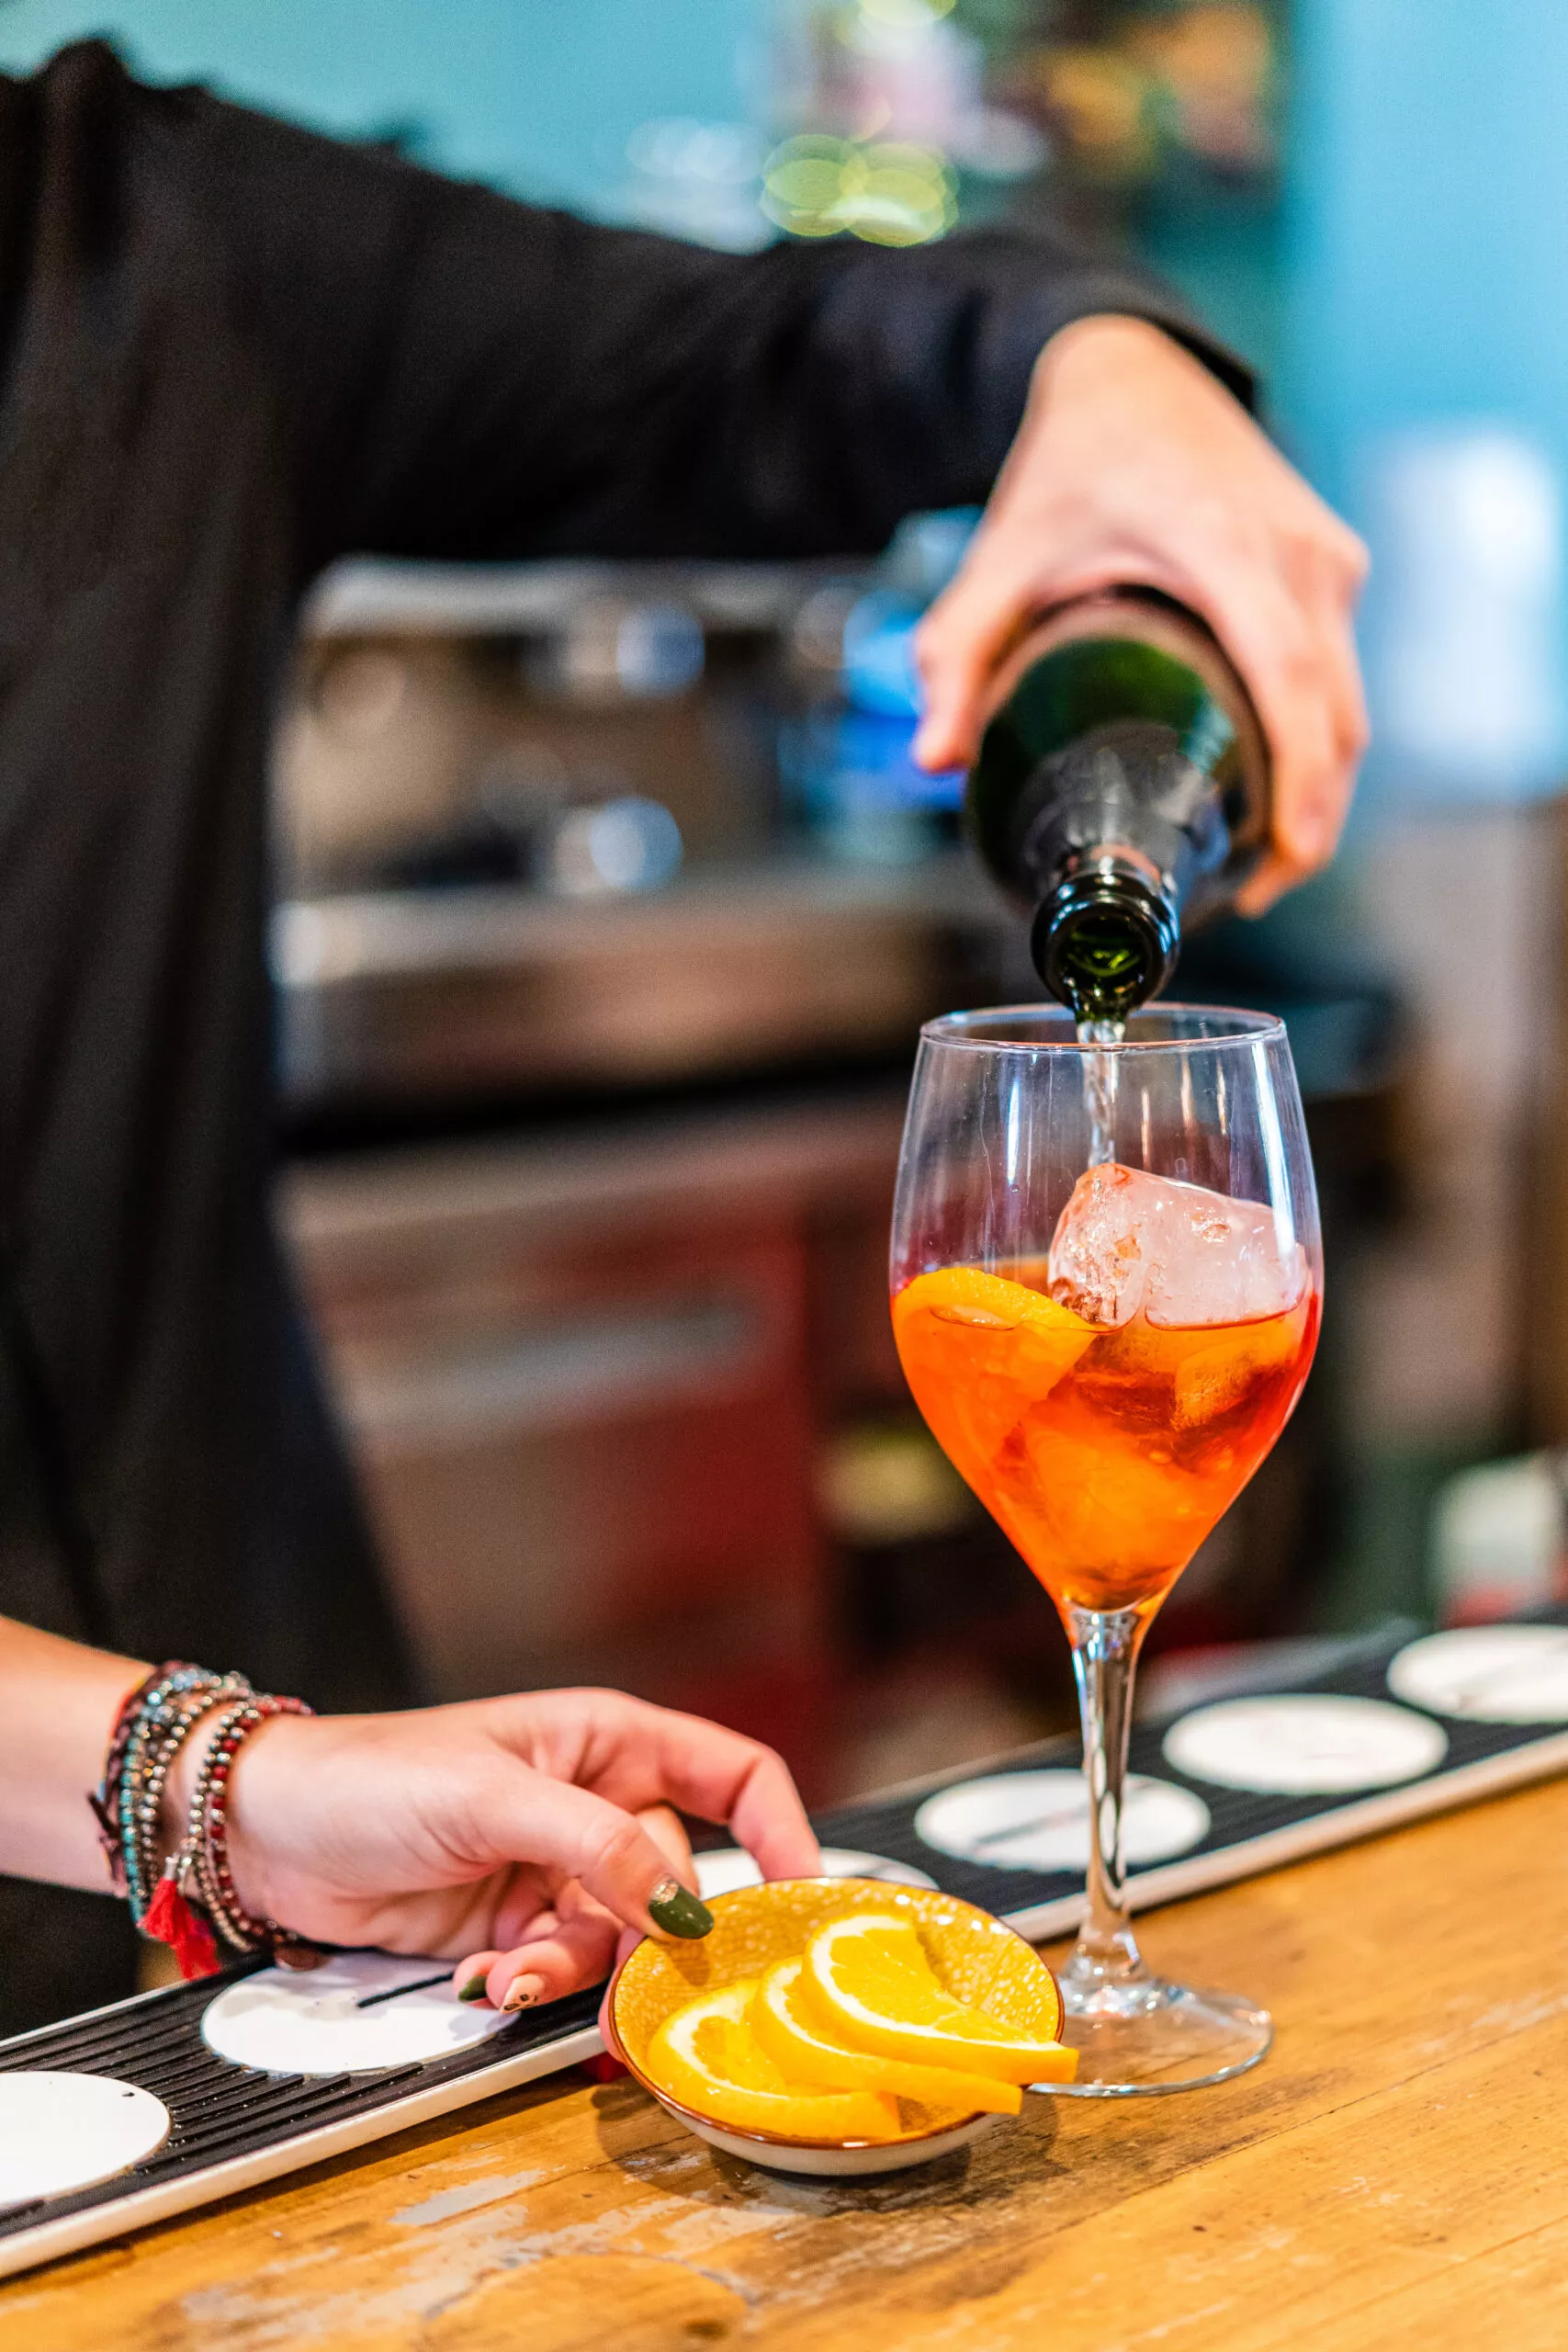 bartender serving orange cocktail with citrus slices decorating the glass